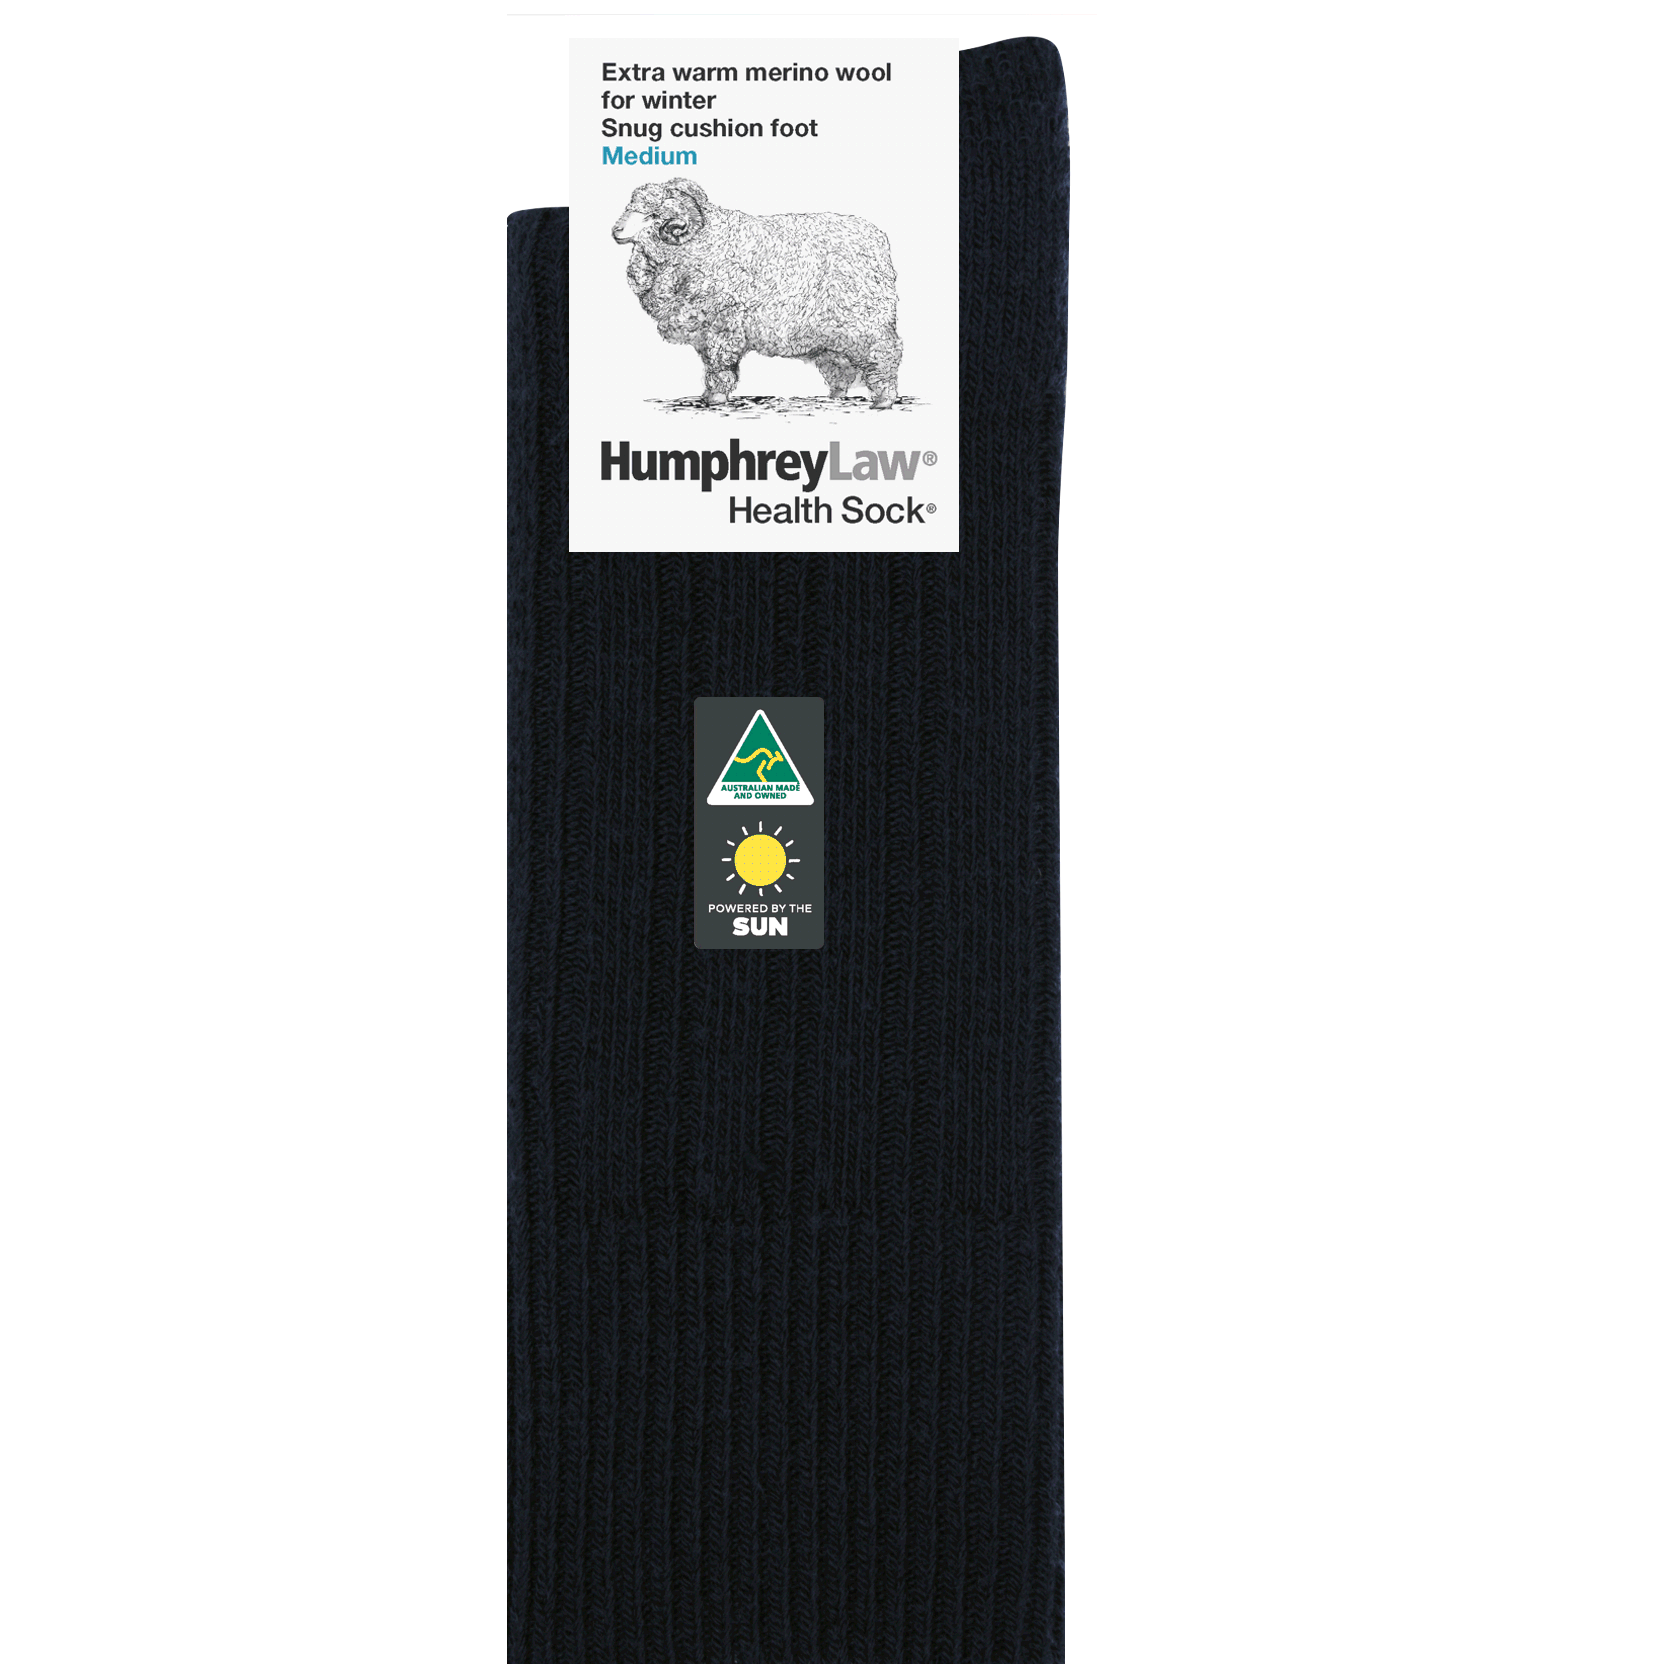 Extra Warm Merino Wool Sock in Black - Aussie Made - The Sockery